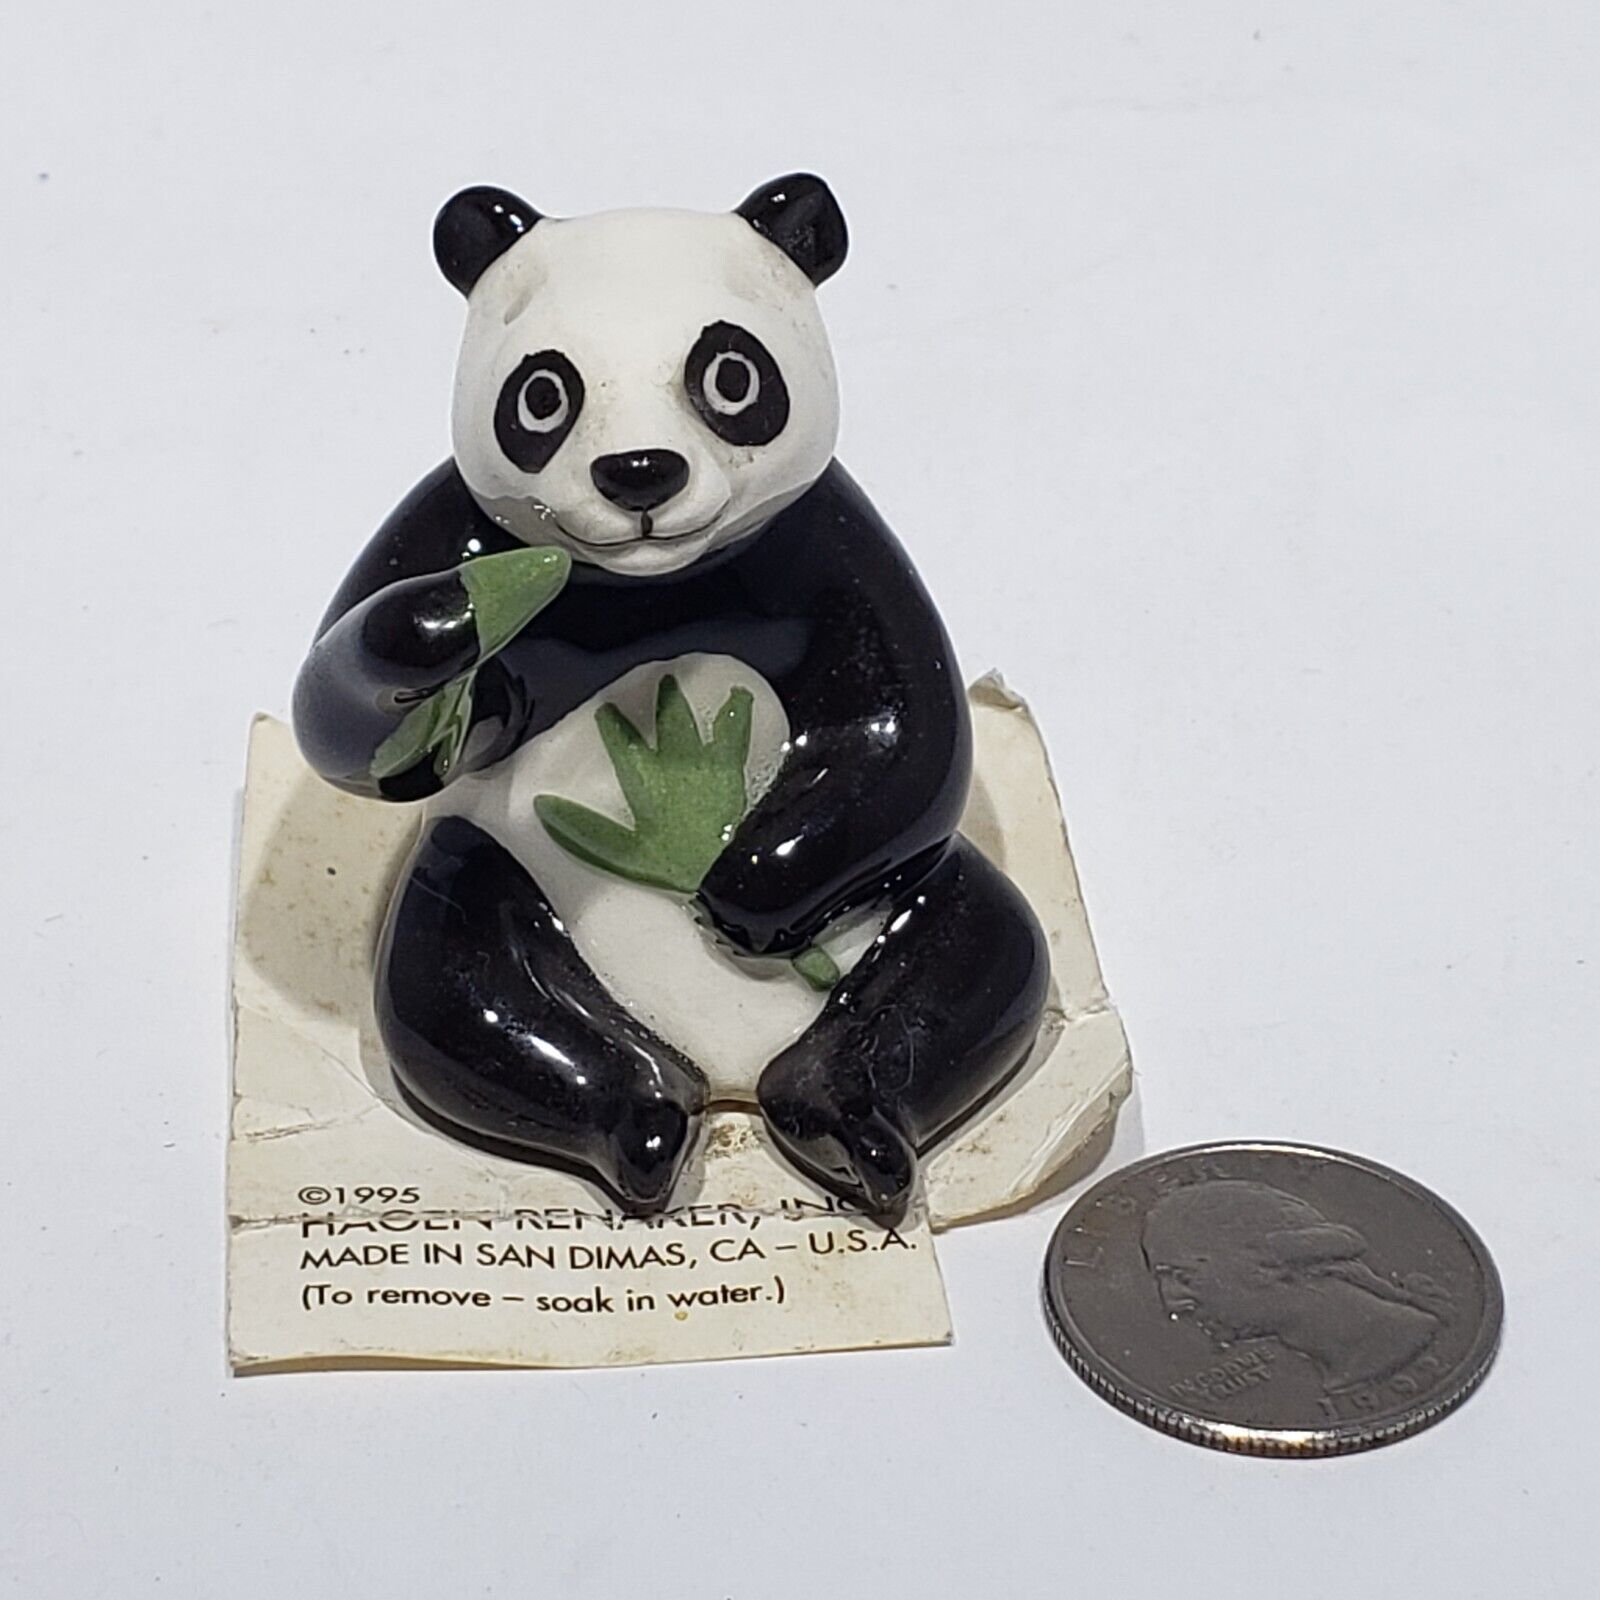 VTG Hagen Renaker 1995 Panda Porcelain Figurine Eating Bamboo On Original Card - $12.95